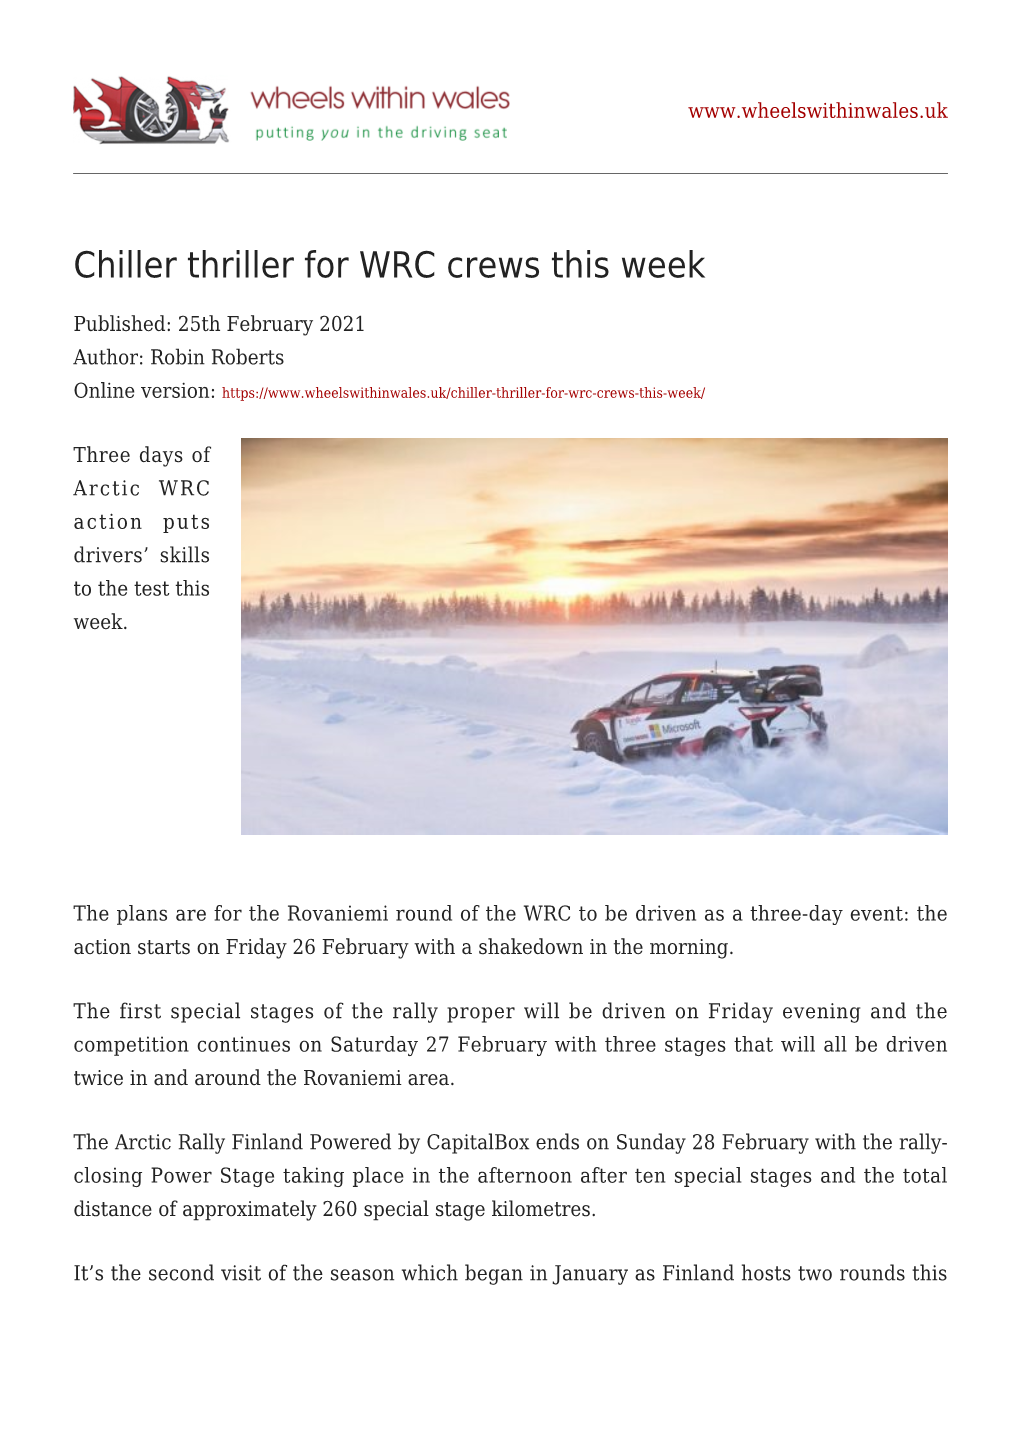 Chiller Thriller for WRC Crews This Week